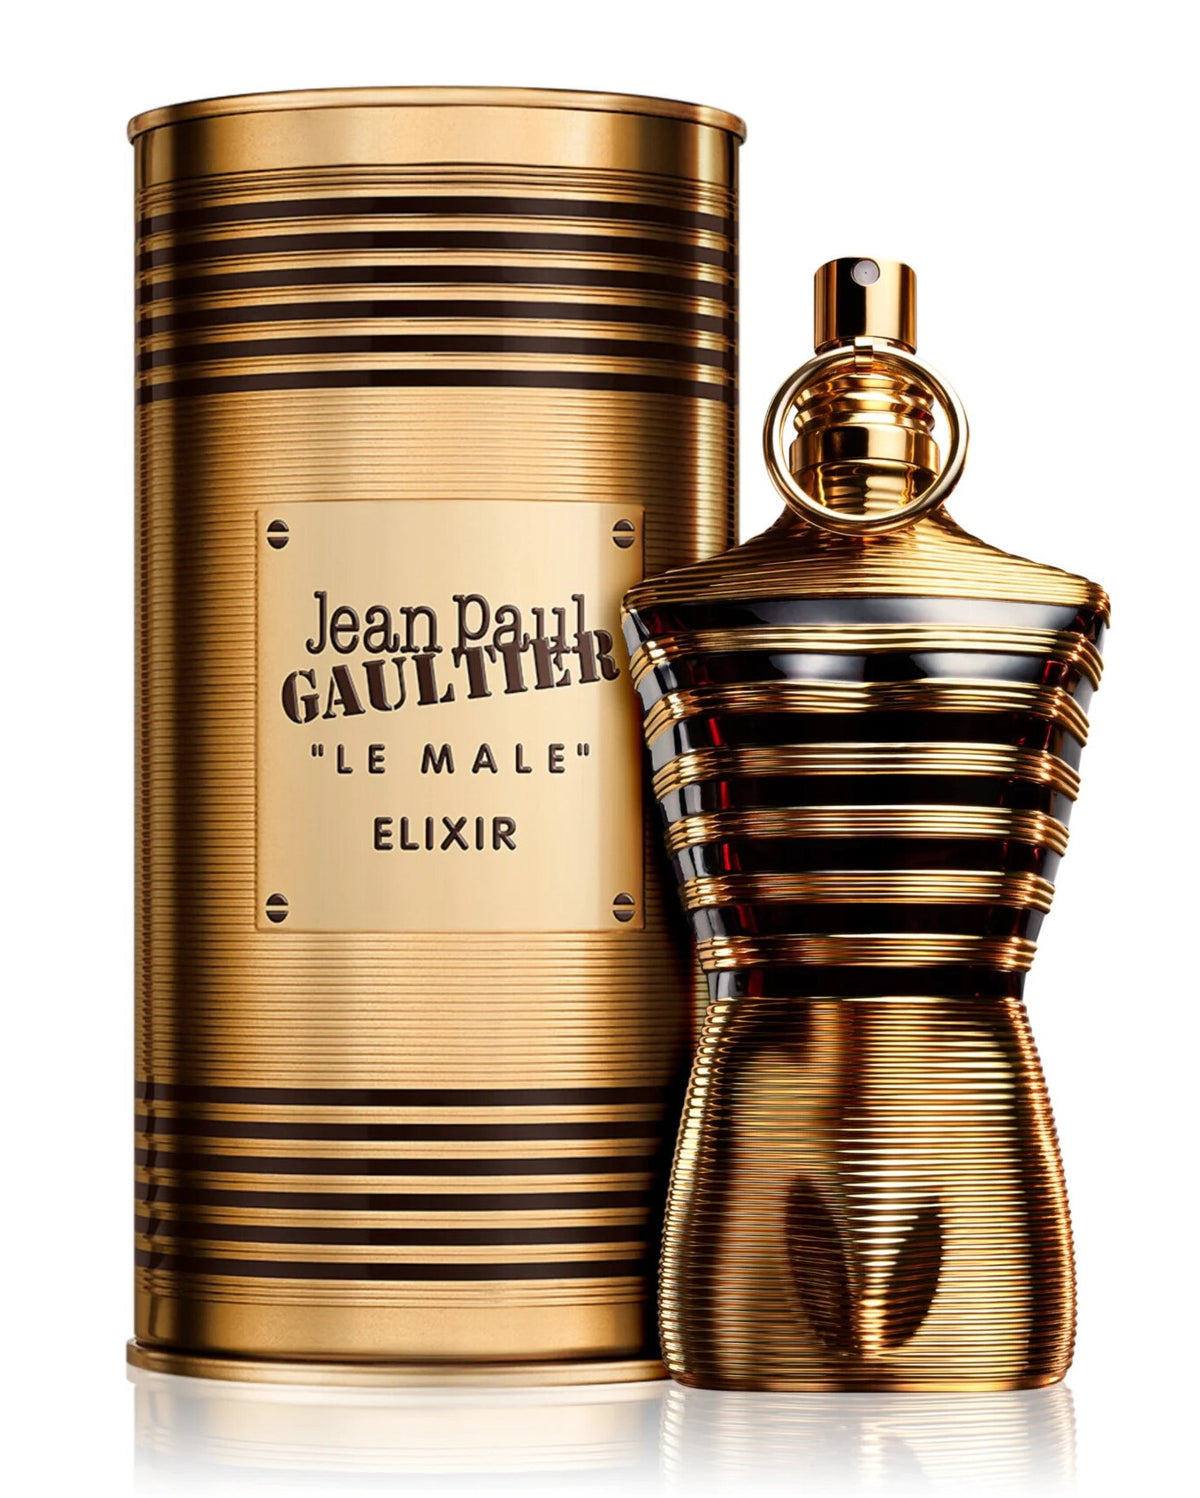 Le Male Elixir by Jean Paul Gaultier for Men - Parfum - 125ml